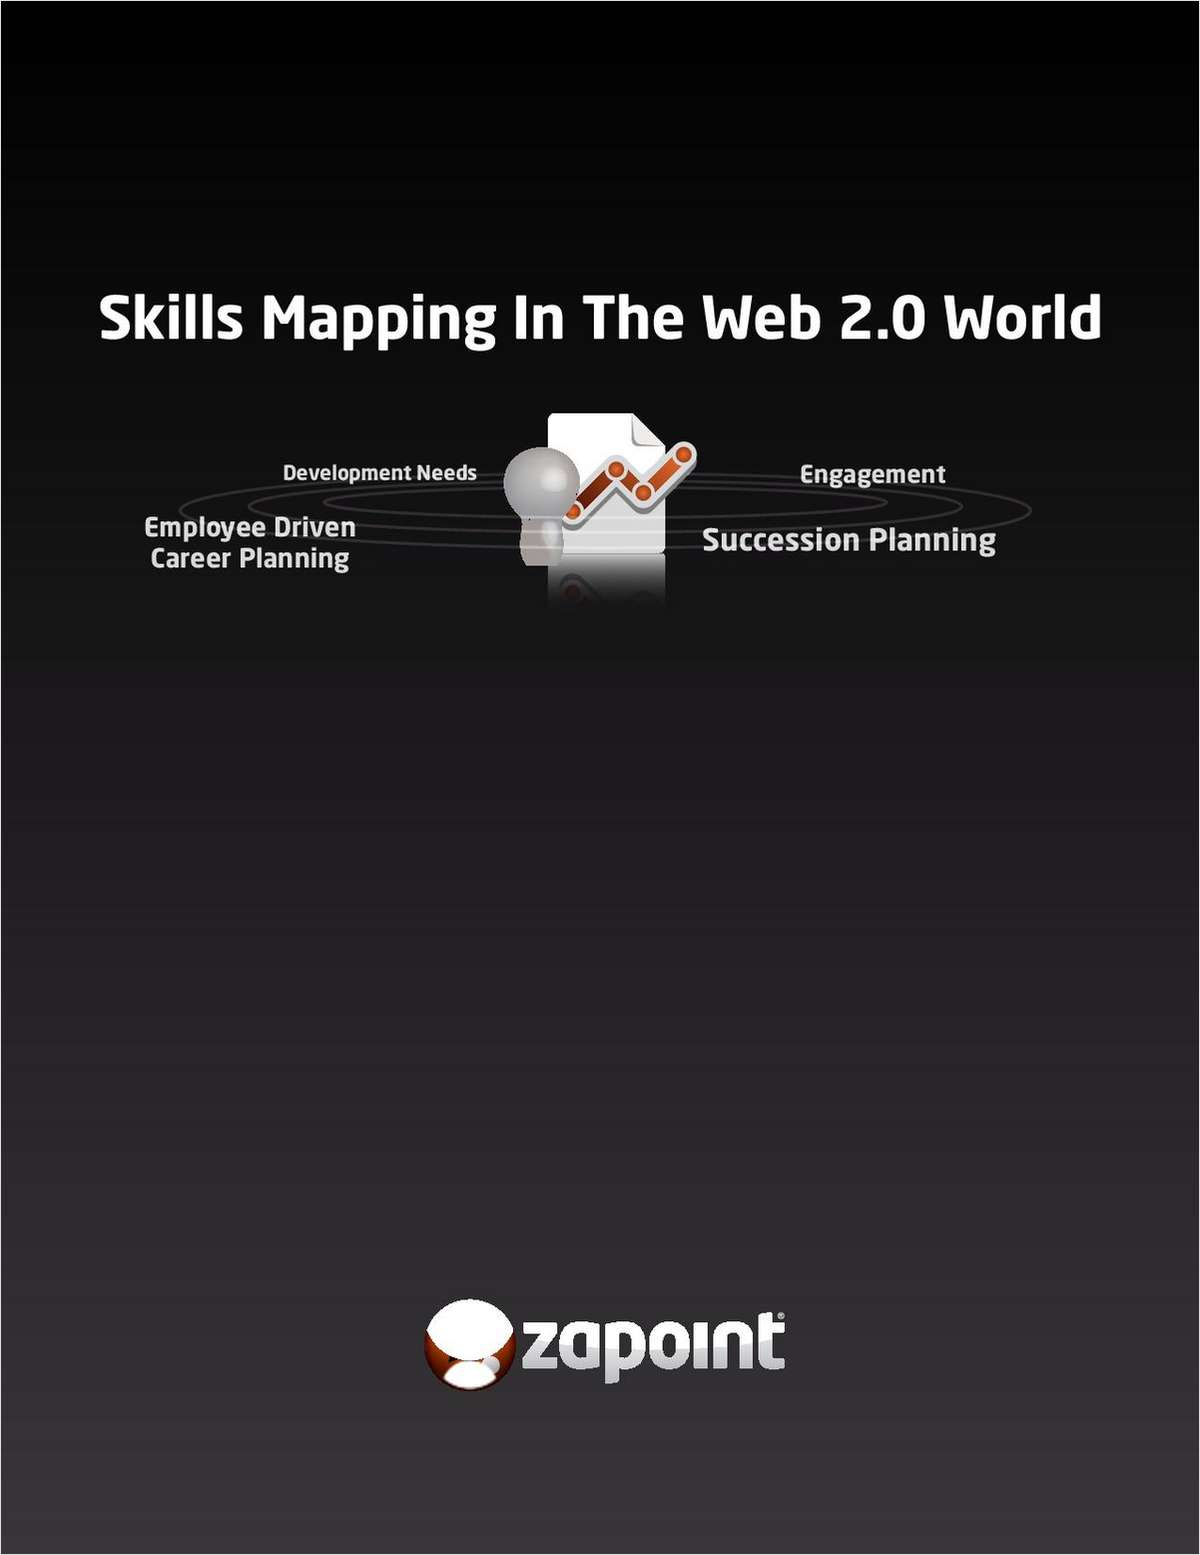 SkillsMapping in a Web 2.0 World